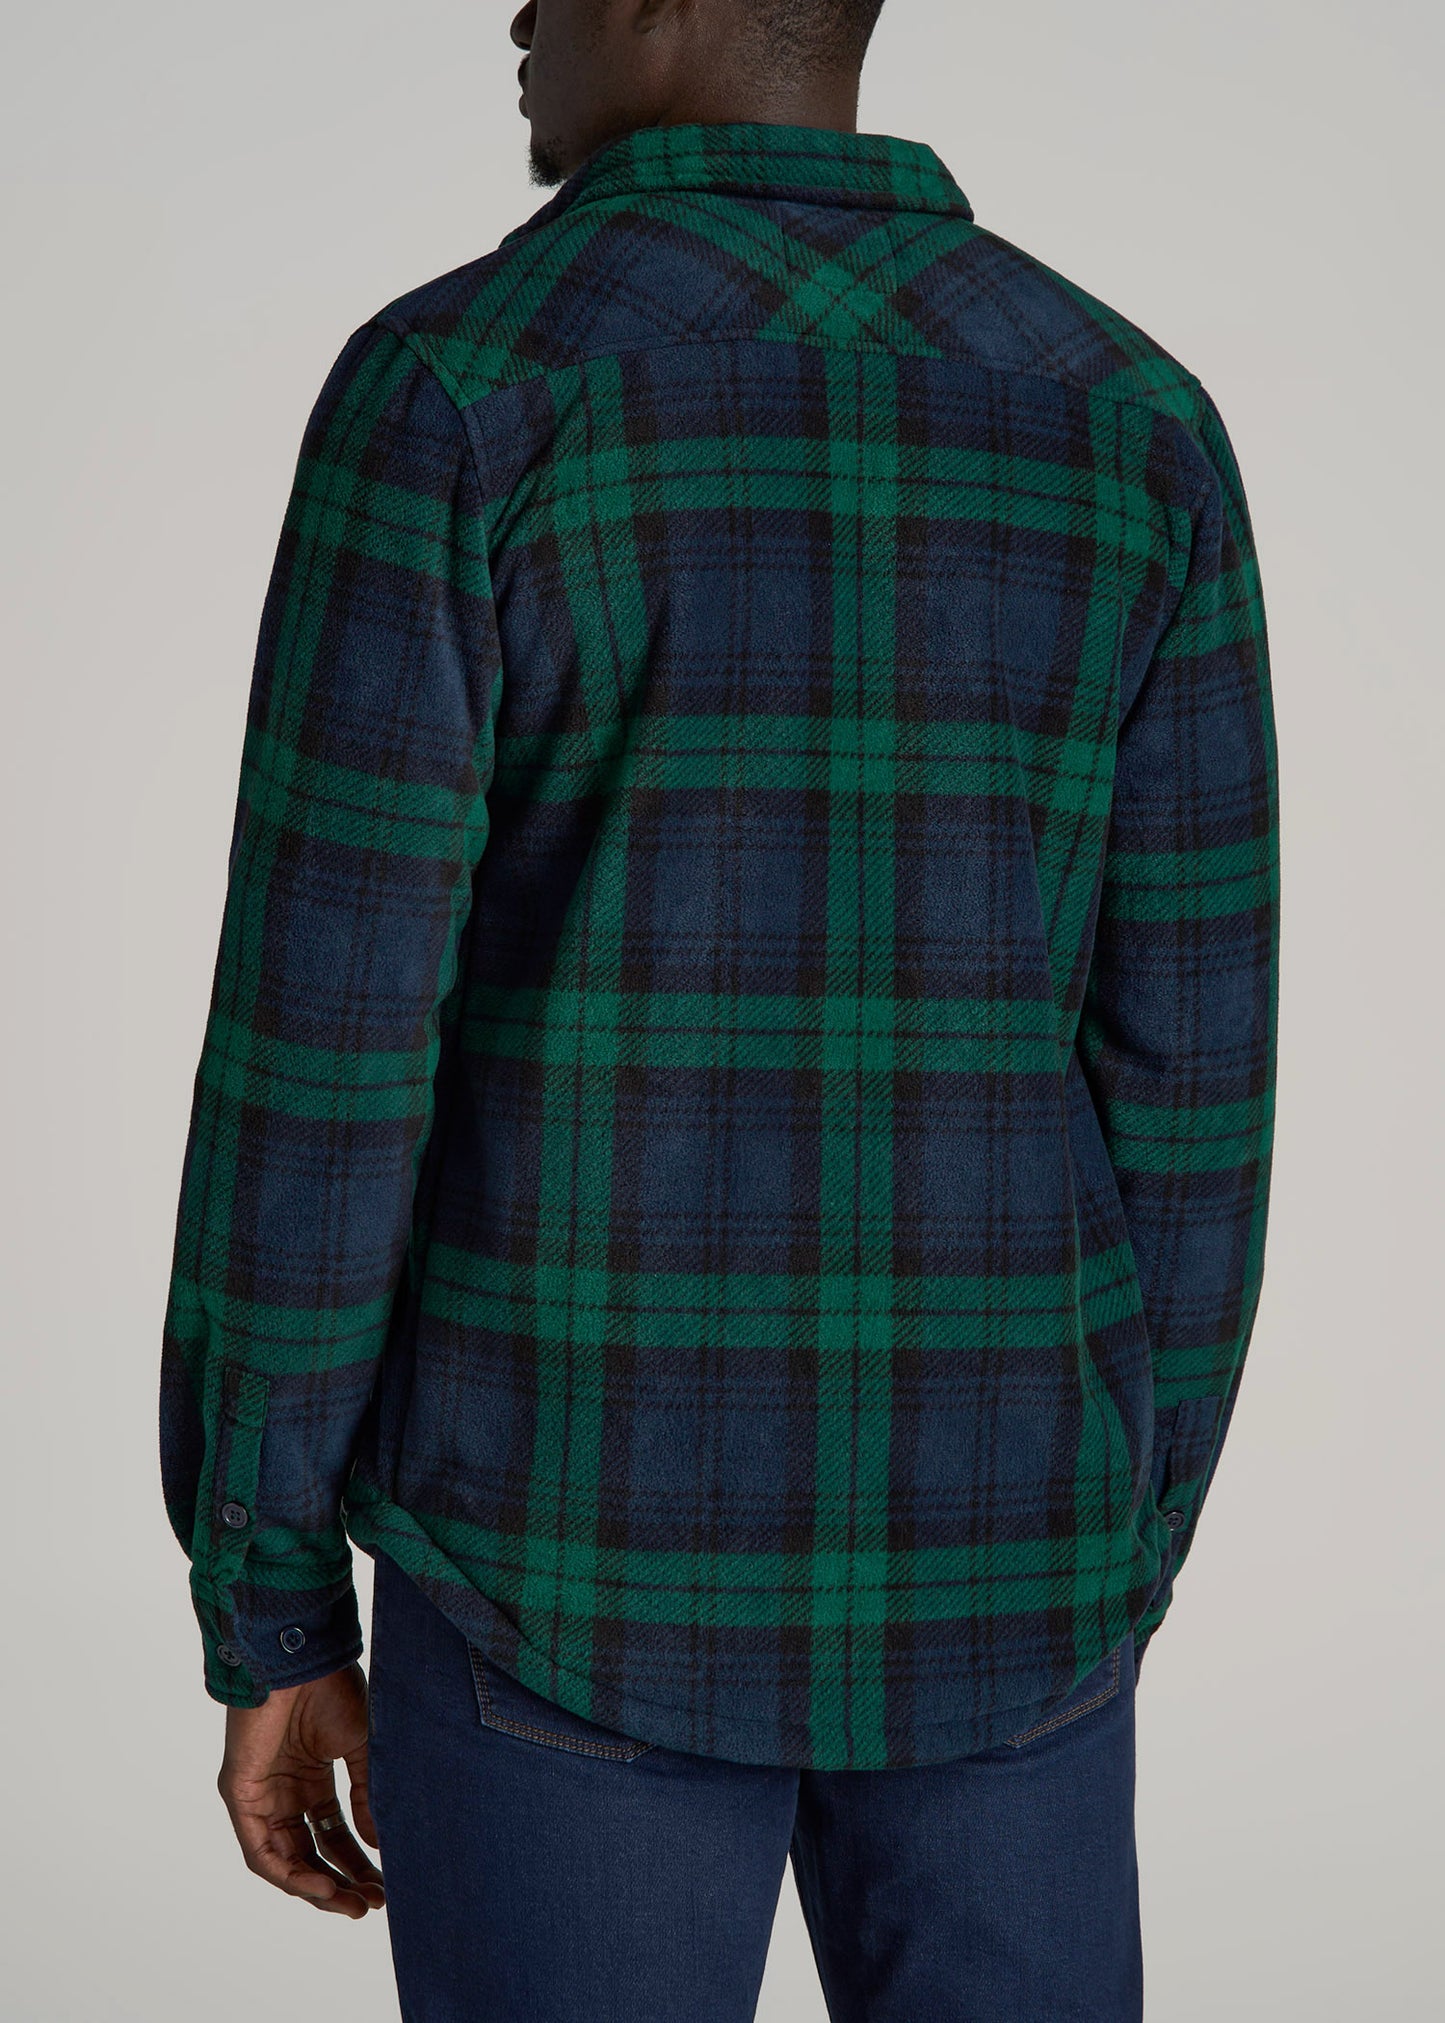 Sherpa-Lined Fleece Overshirt for Tall Men in Dark Blue & Green Plaid